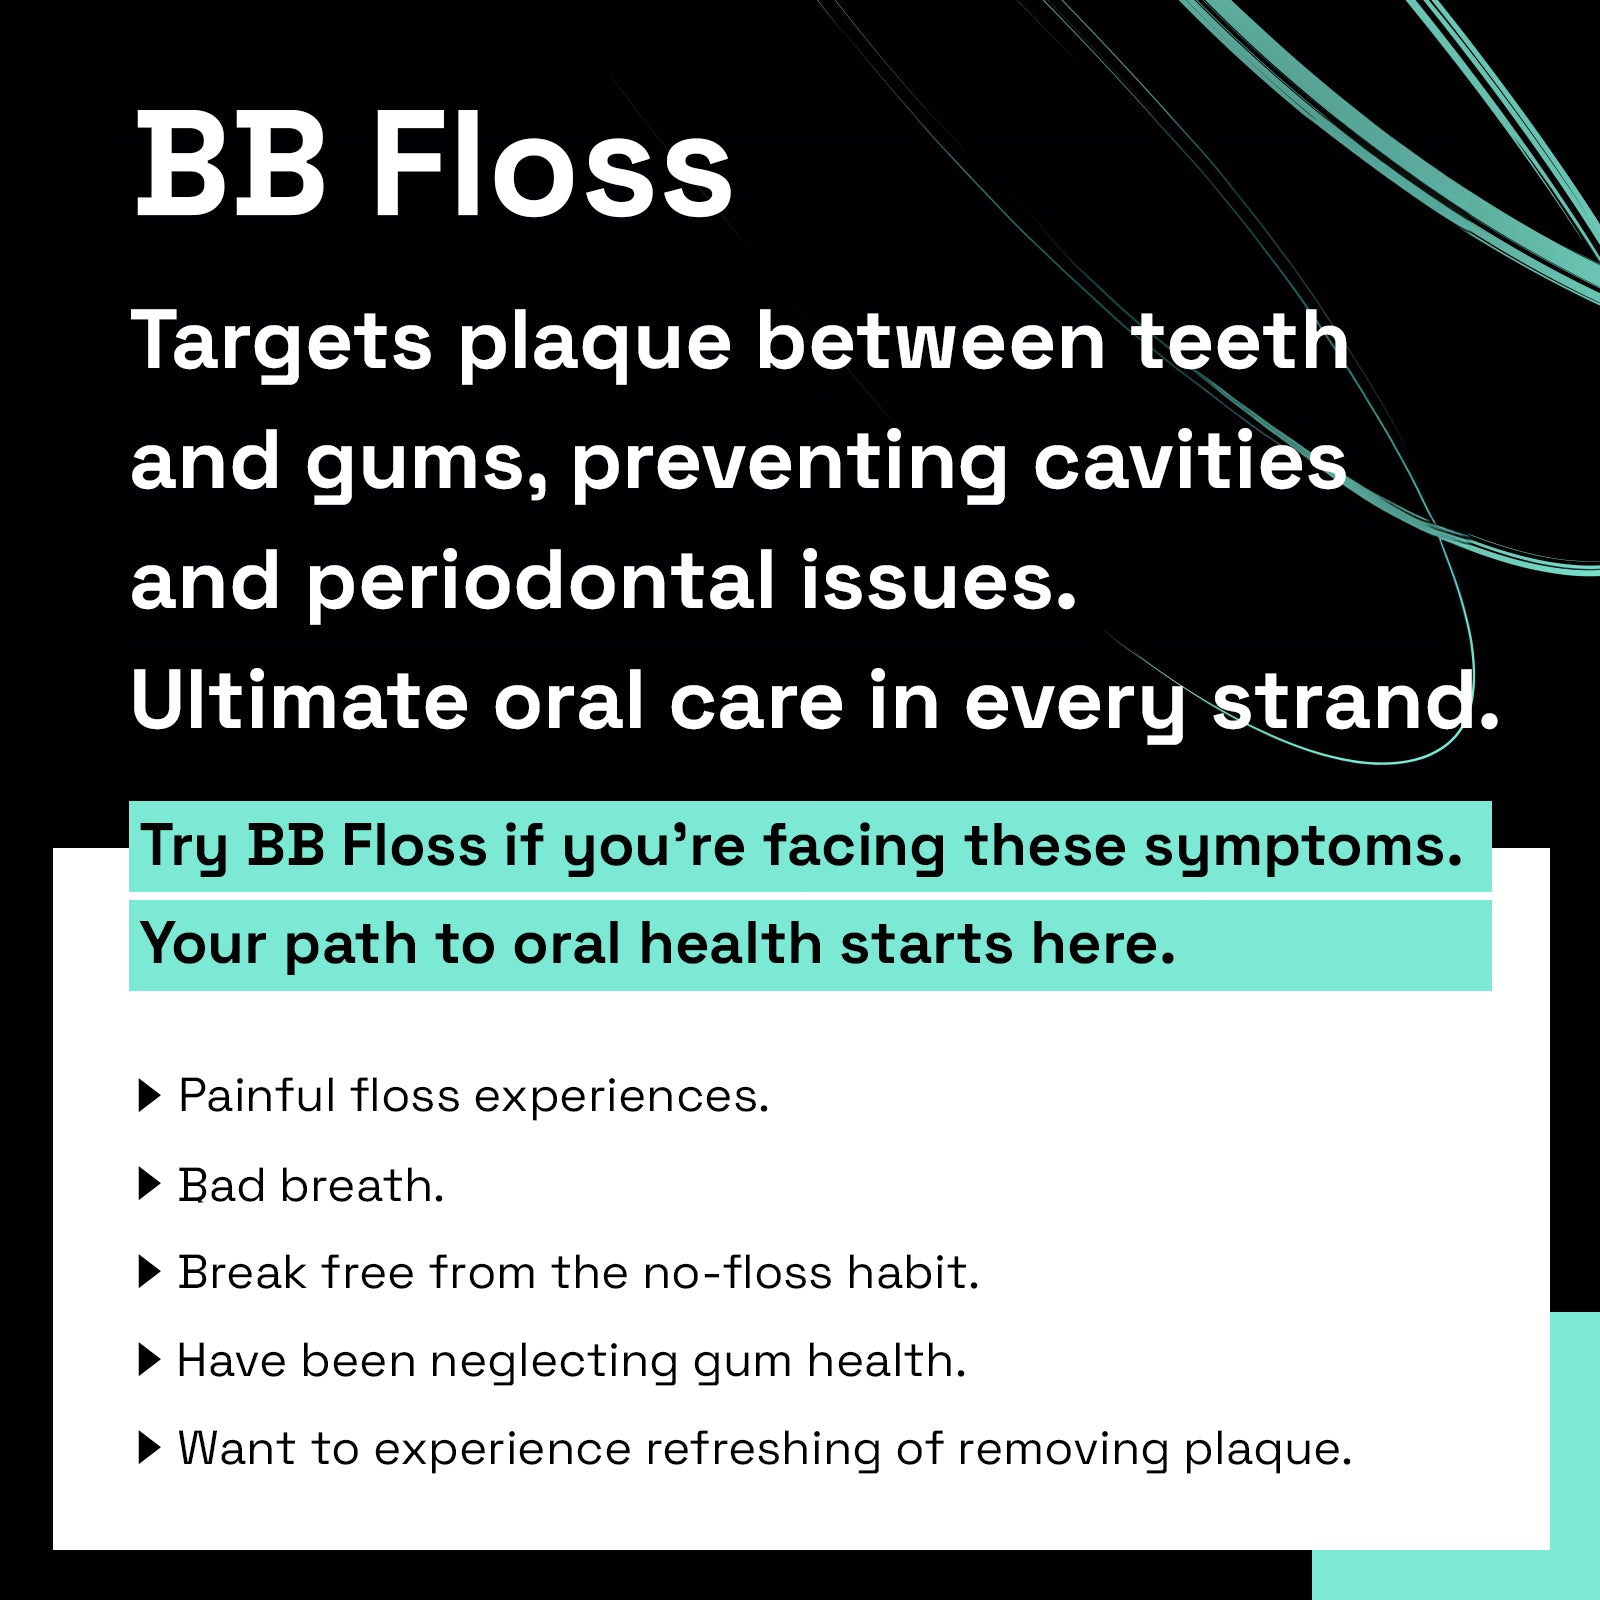 Brushmo Black Floss, Expanding Dental Floss, 55 YD, 1pk